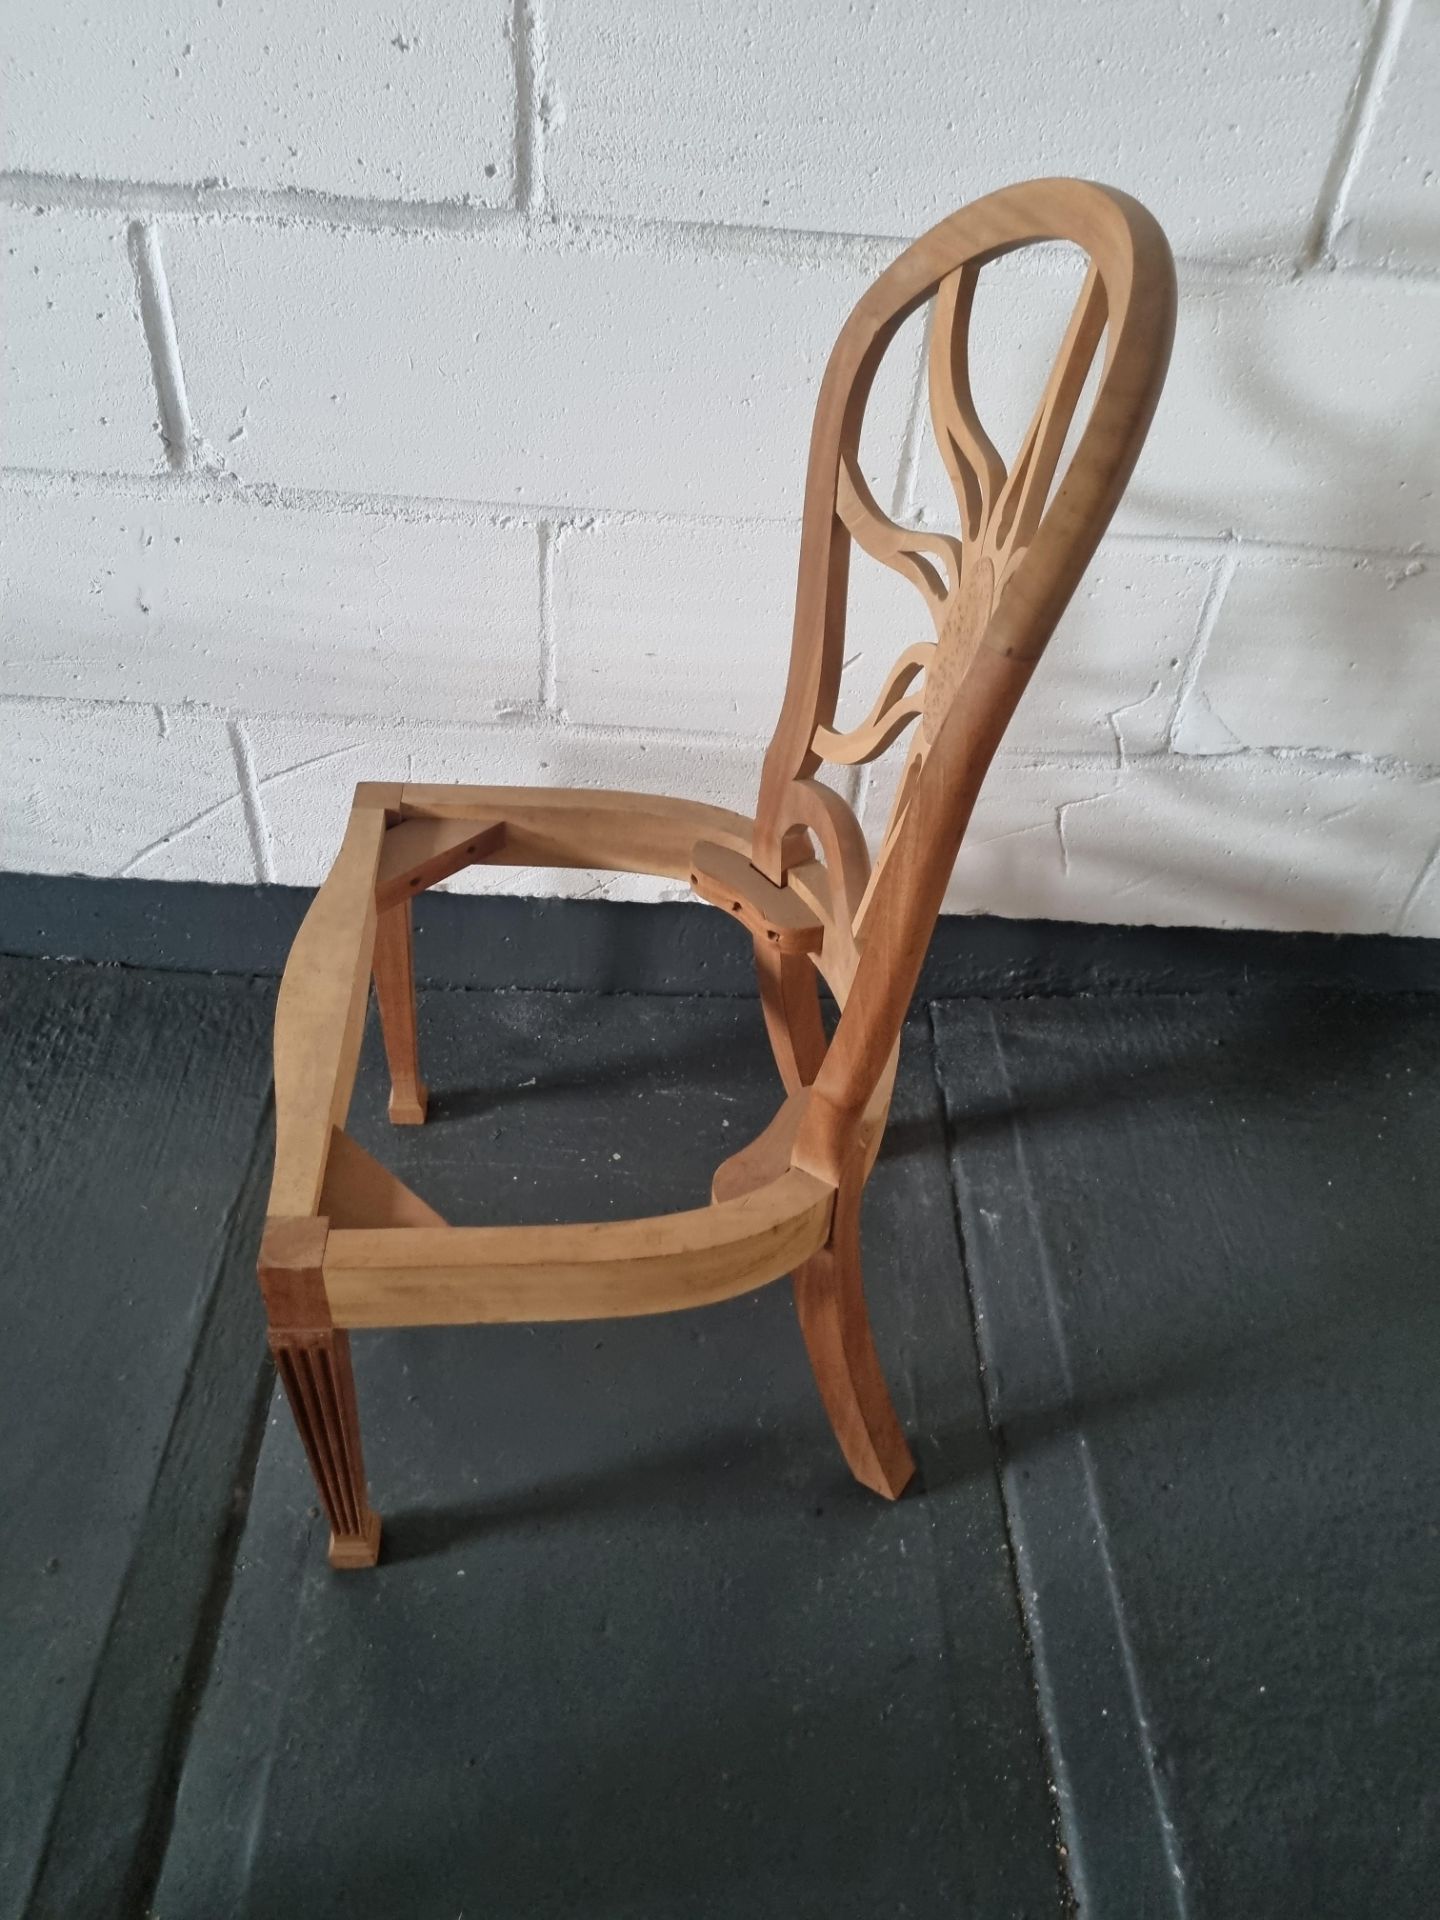 Arthur Brett Unupholstered & Unfinished Sunburst Side Chair George III Style The Unusual Design - Image 5 of 5